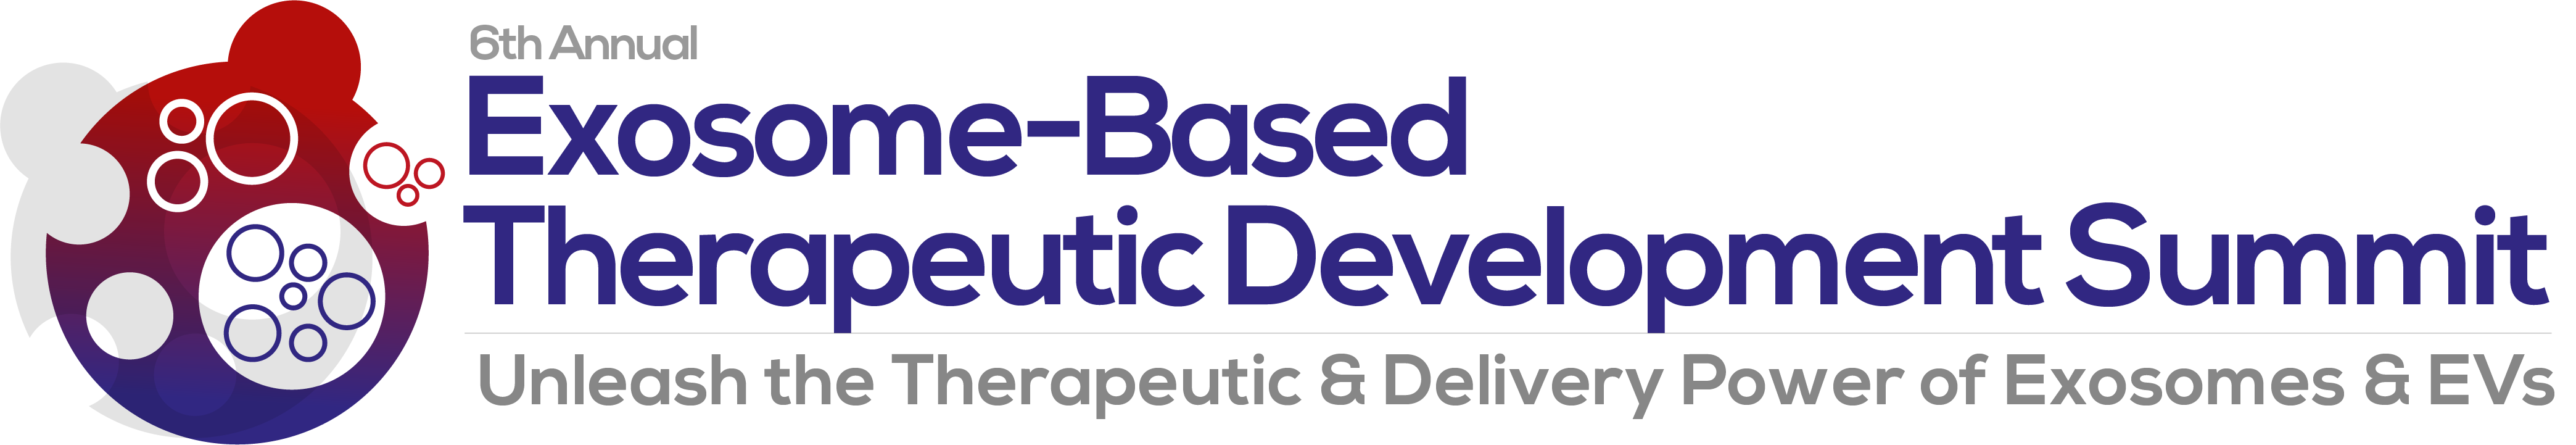 48435 - 6th Exosome-Based Therapeutic Development Summit logo